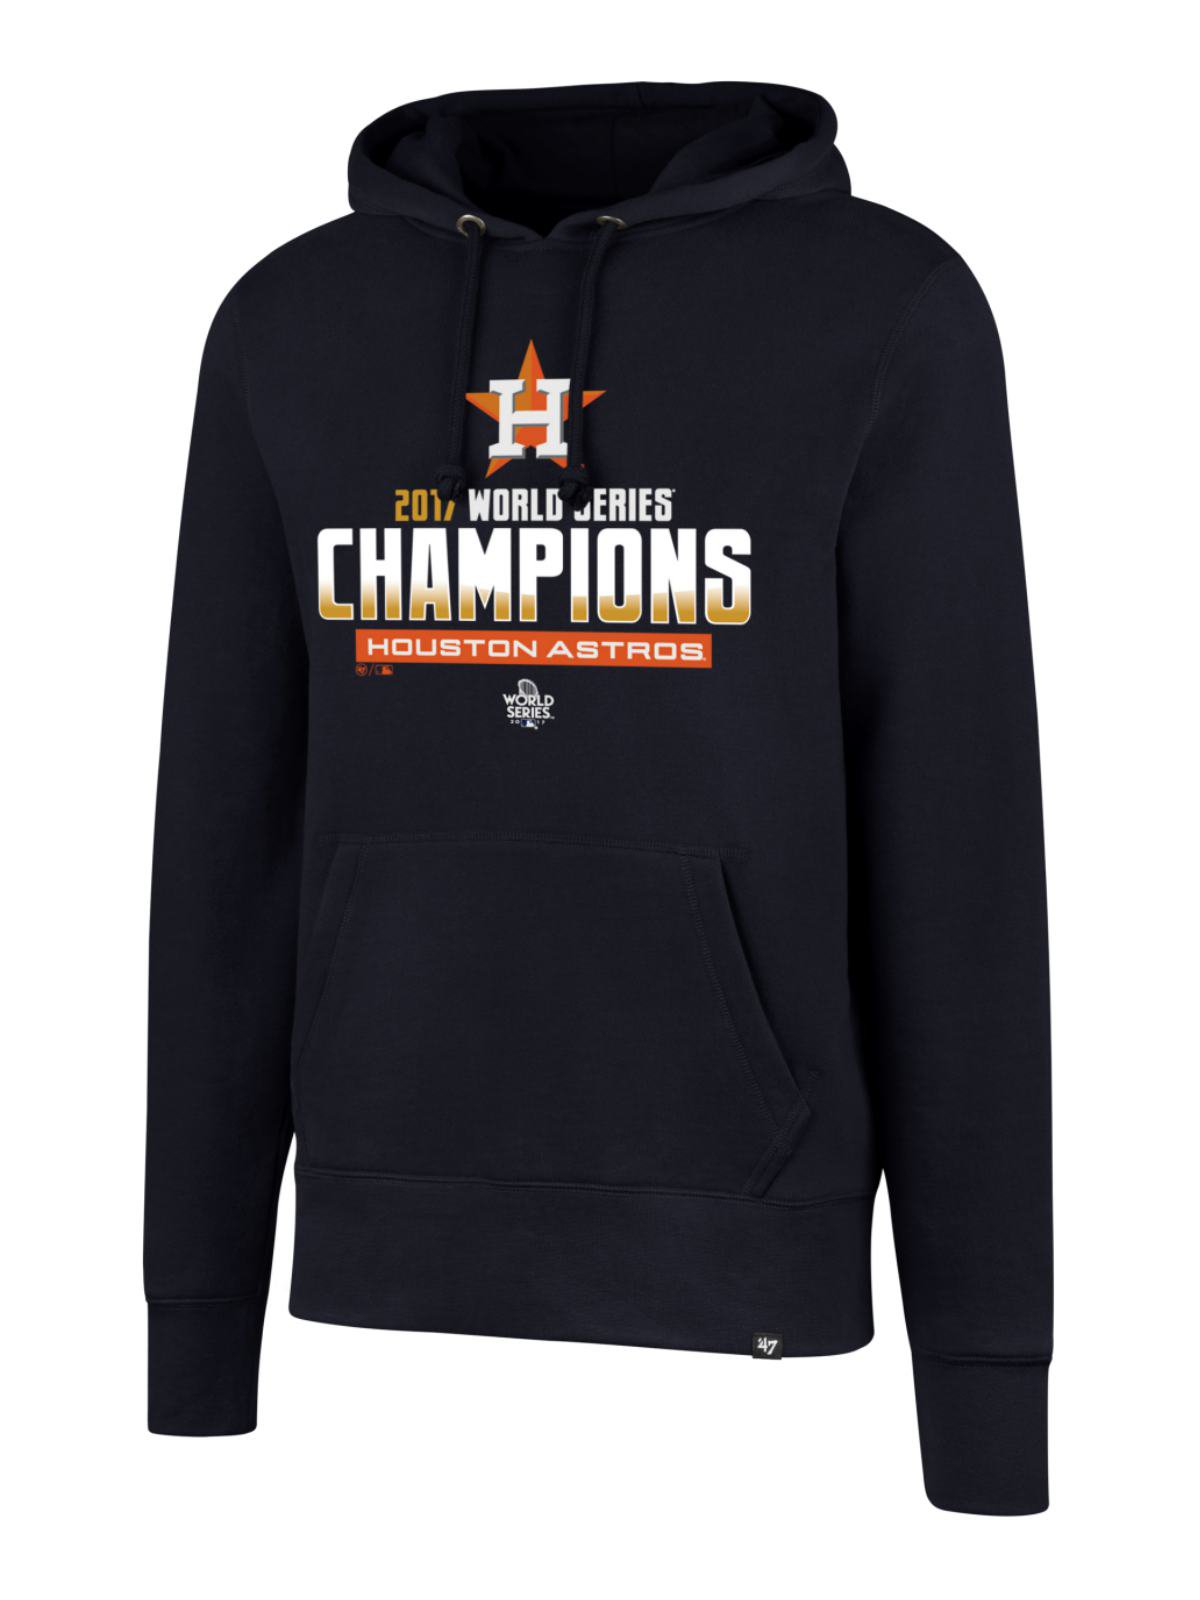 Houston Astros 2017 World Series Champions 47 Brand Navy Hoodie Sweatshirt